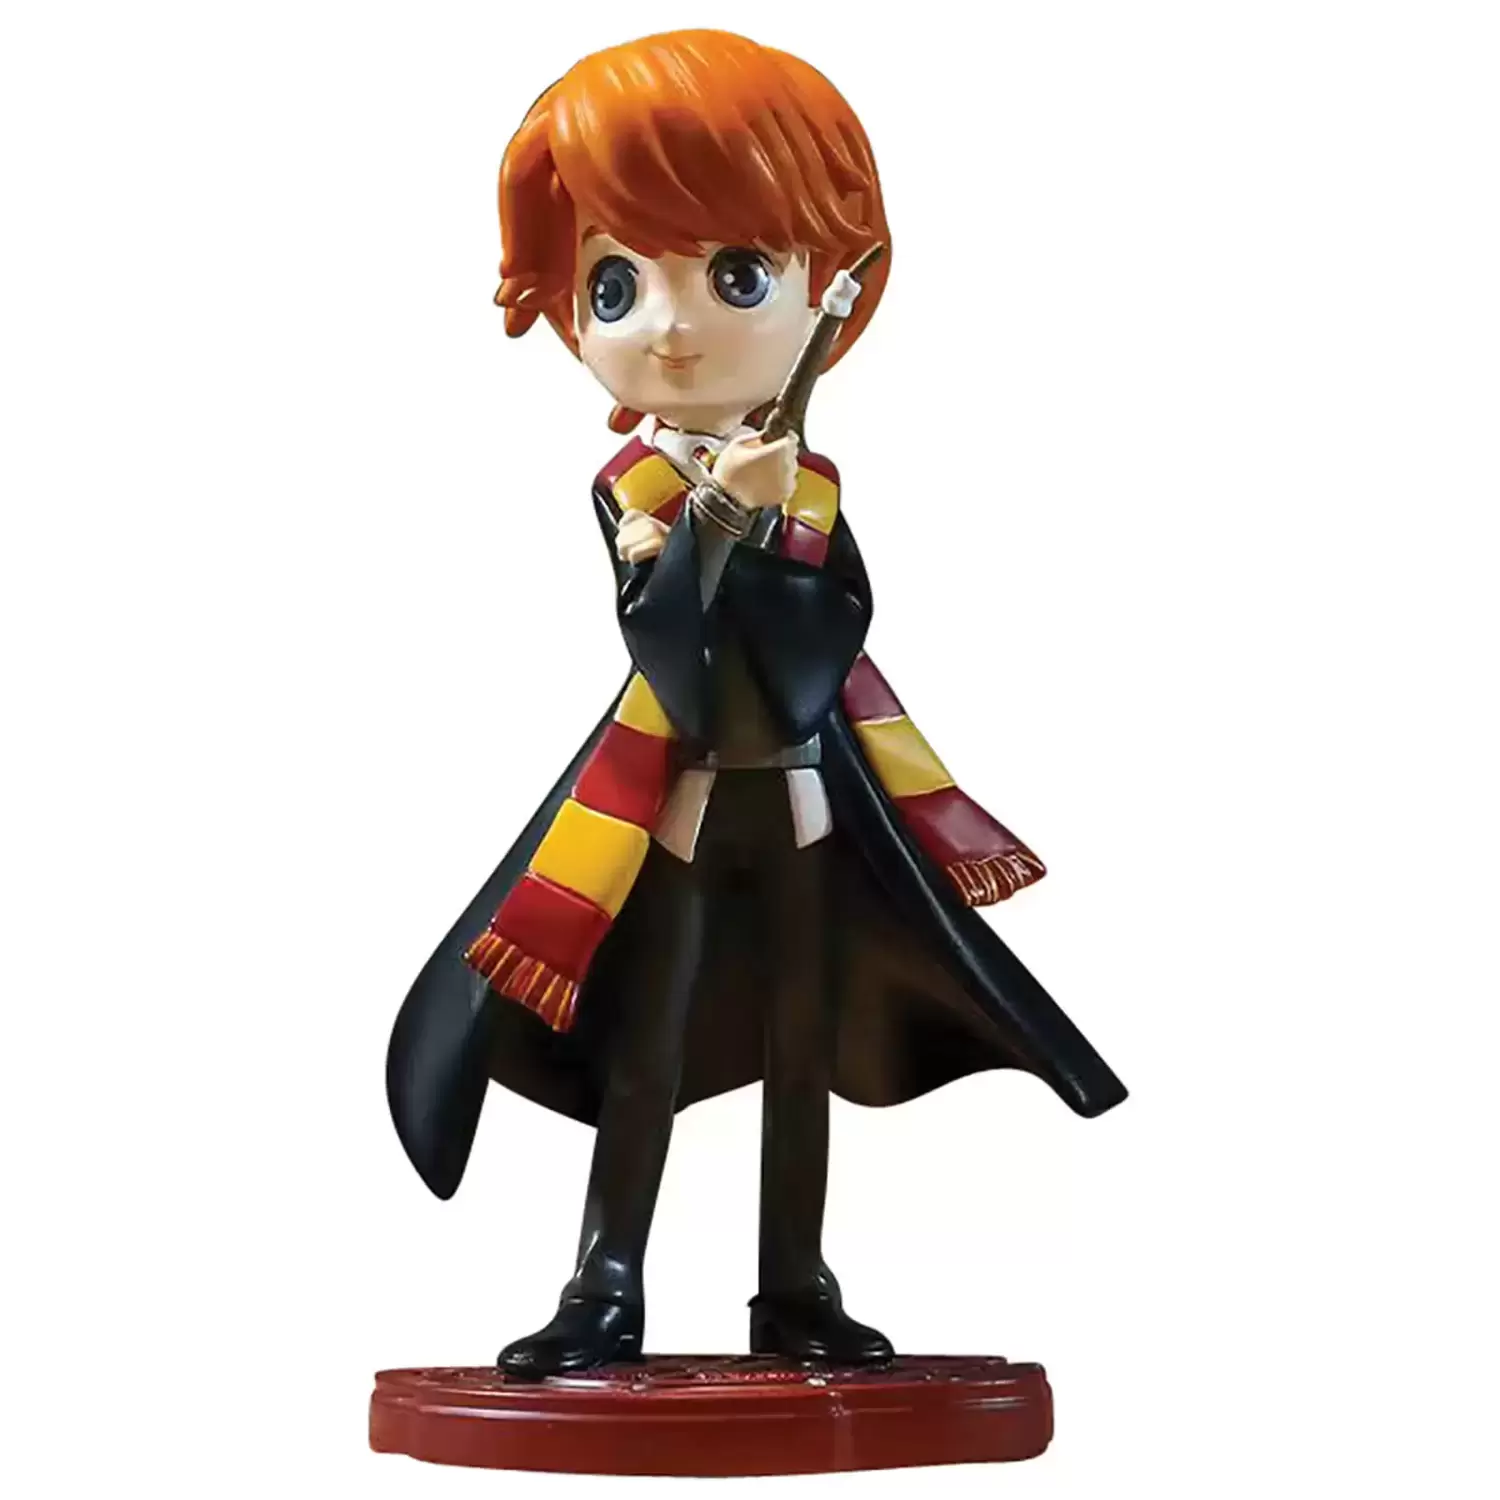 Wizarding World of Harry Potter (Enesco) - Ron Weasley Figurine